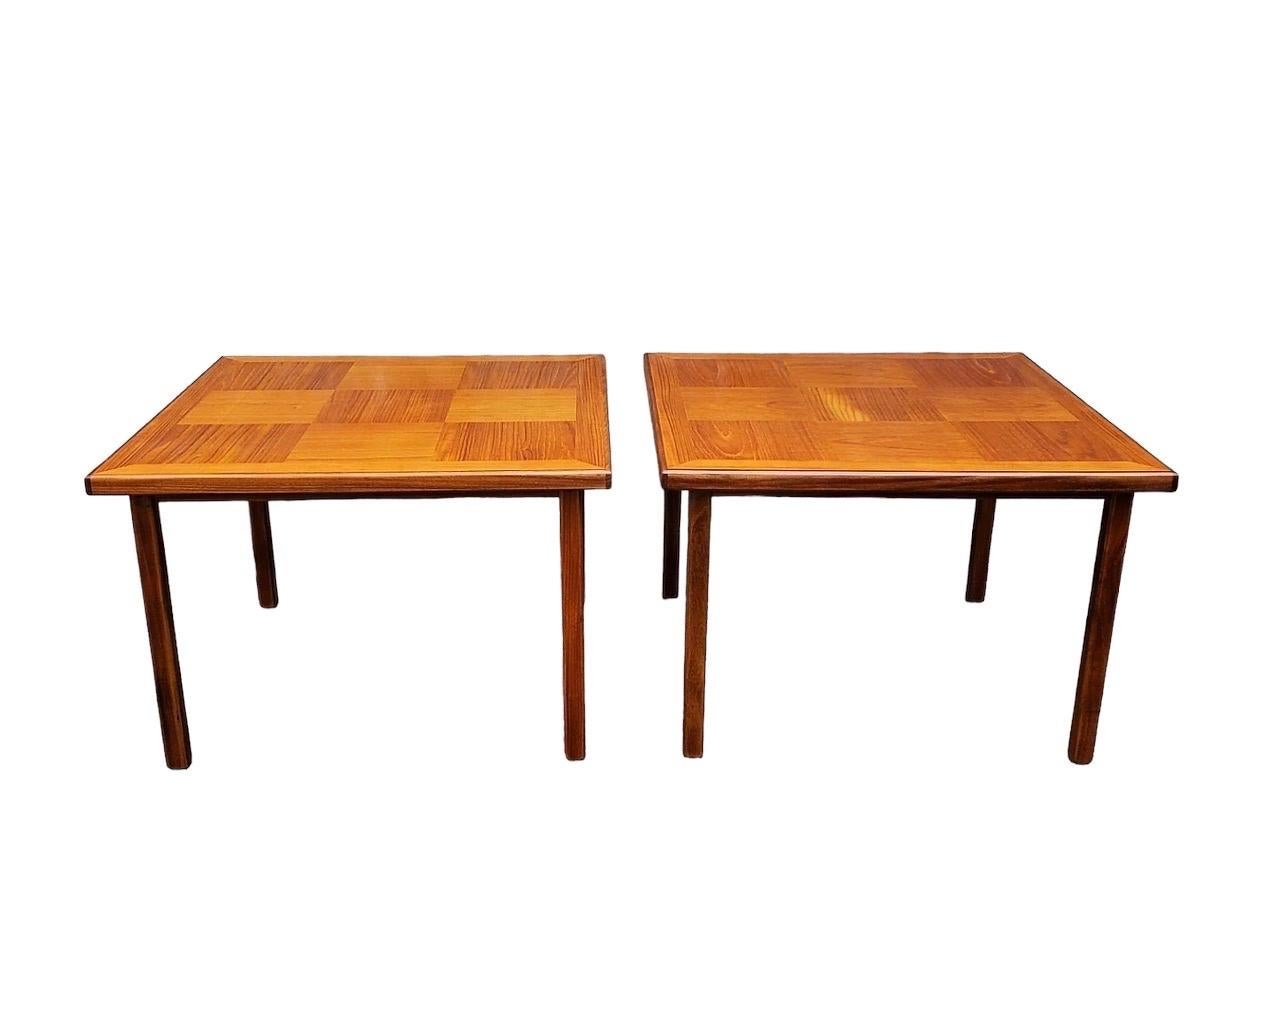 Vintage Danish Mid-Century Modern teak coffee tables. Set of 2.

Dimensions. 29 W; 29 D; 20 H.